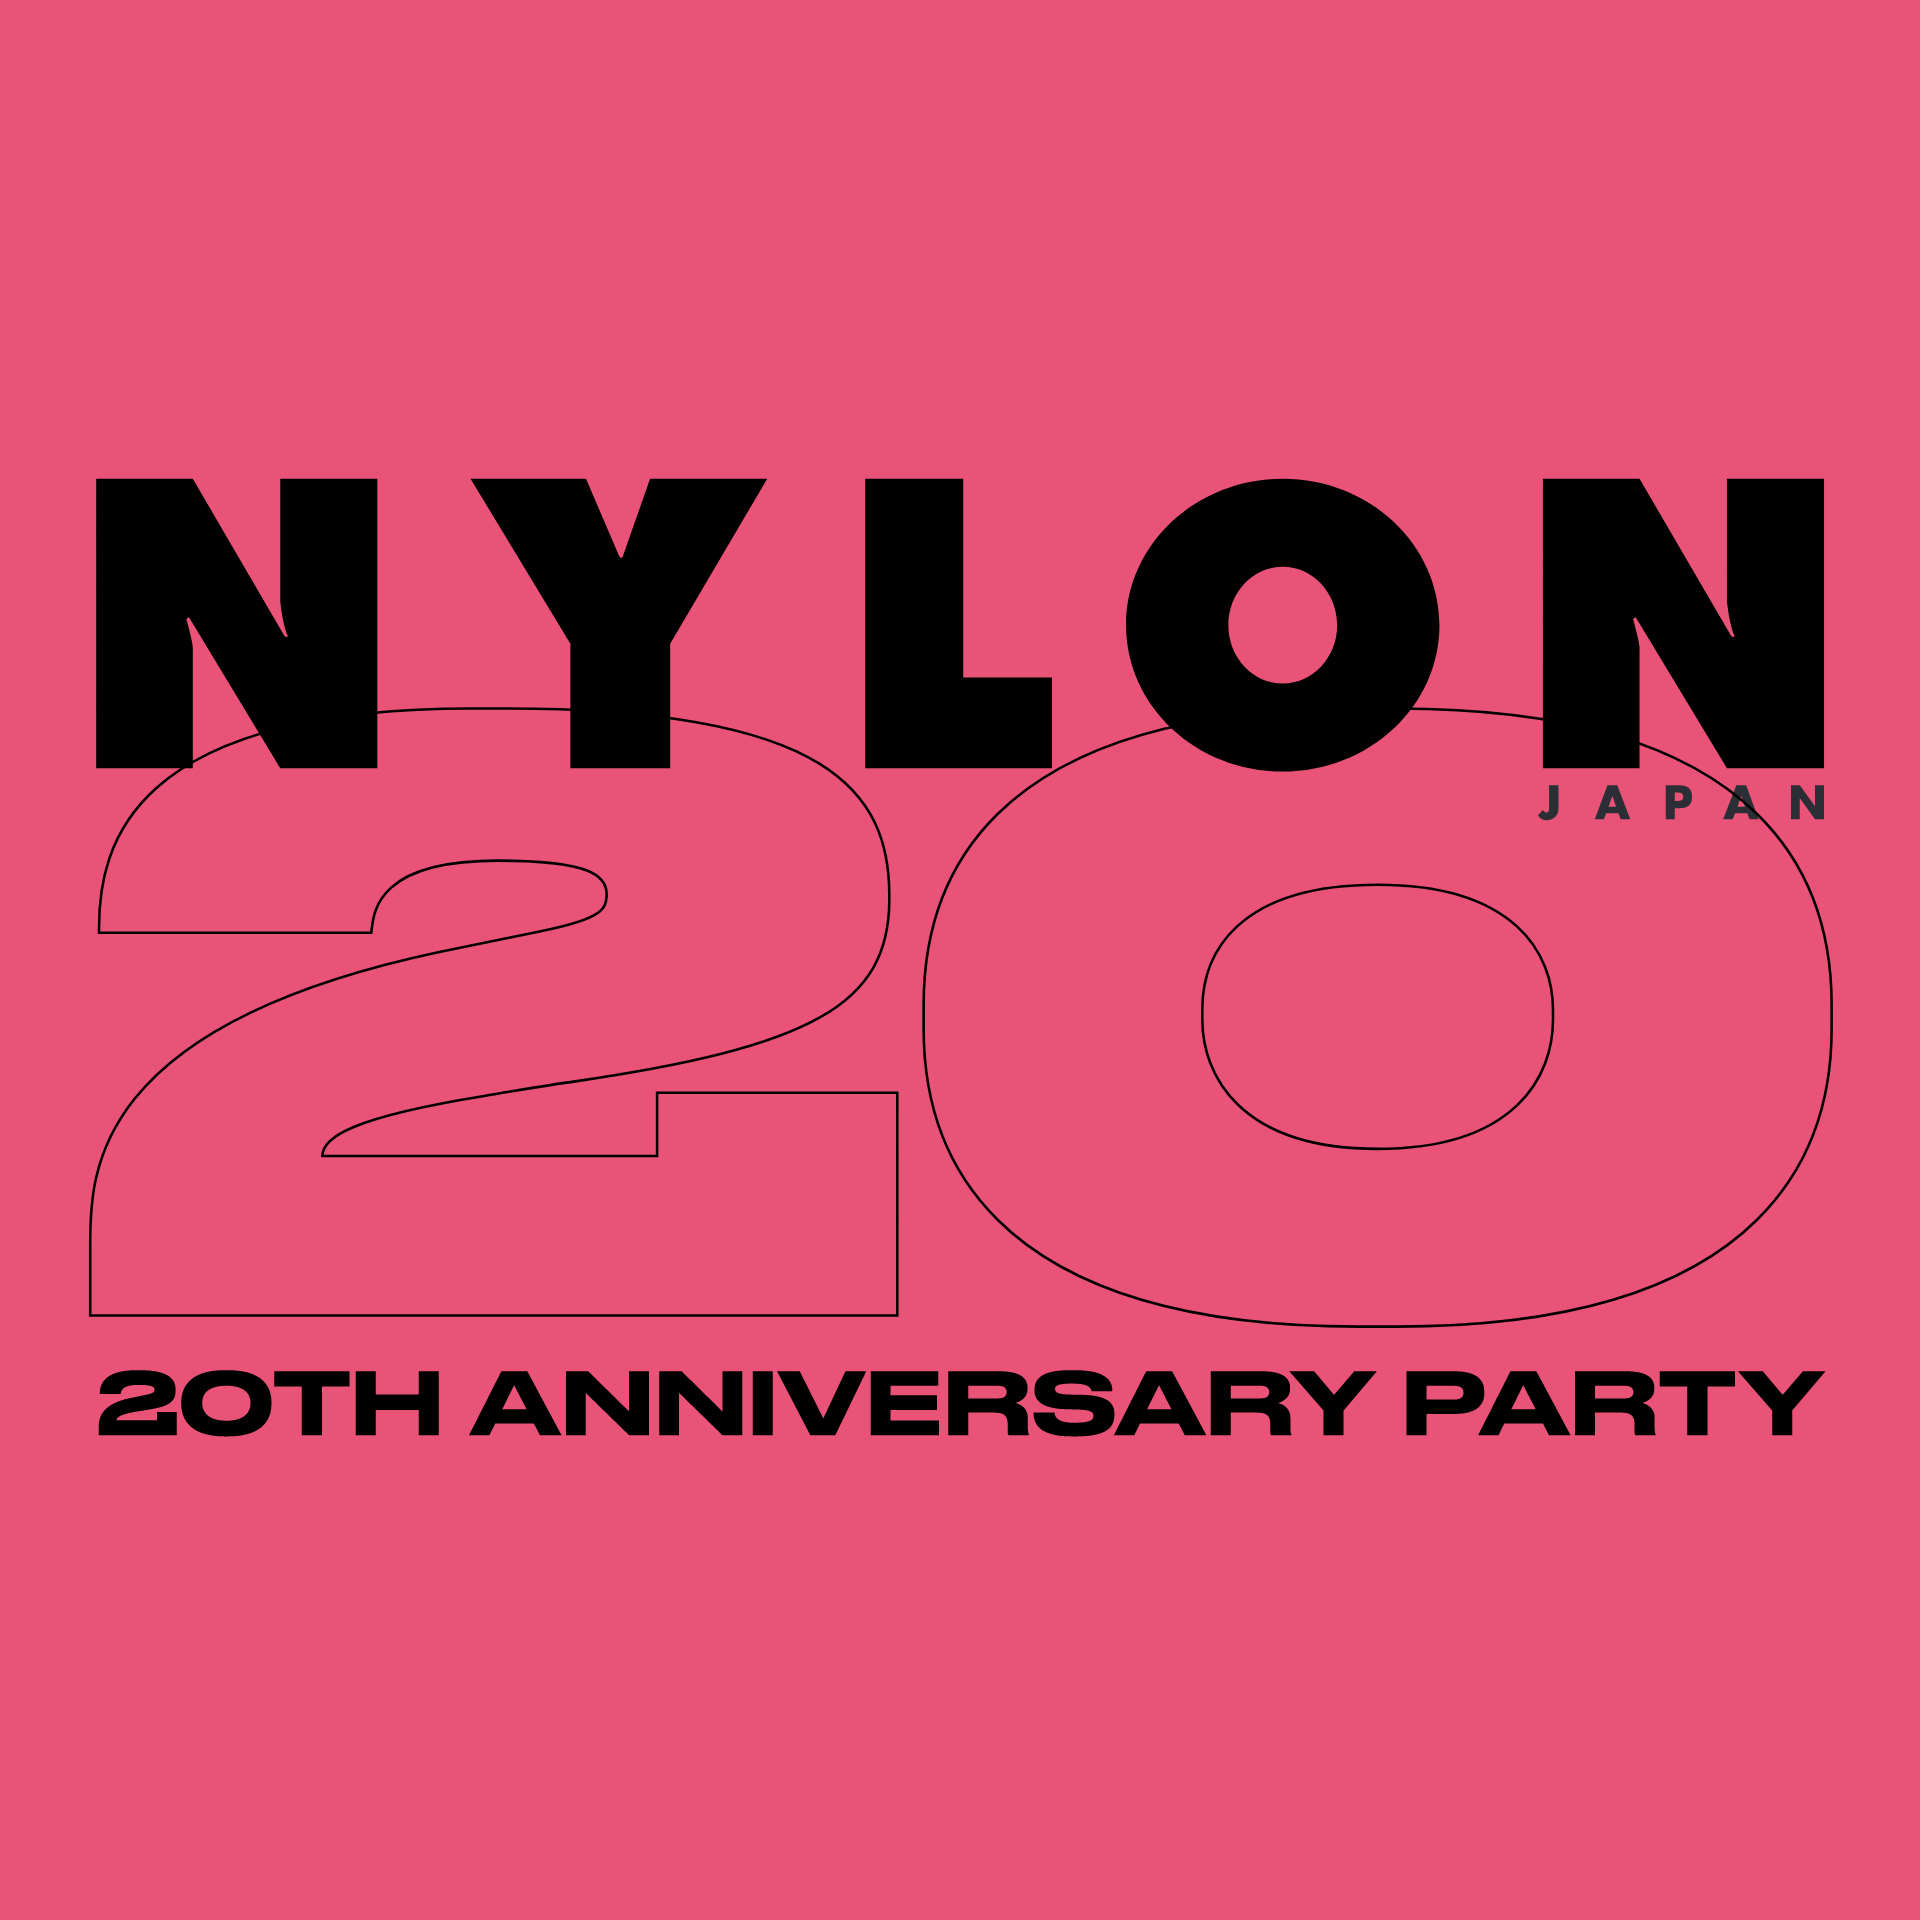 NYLON JAPAN 20TH ANNIVERSARY PARTY